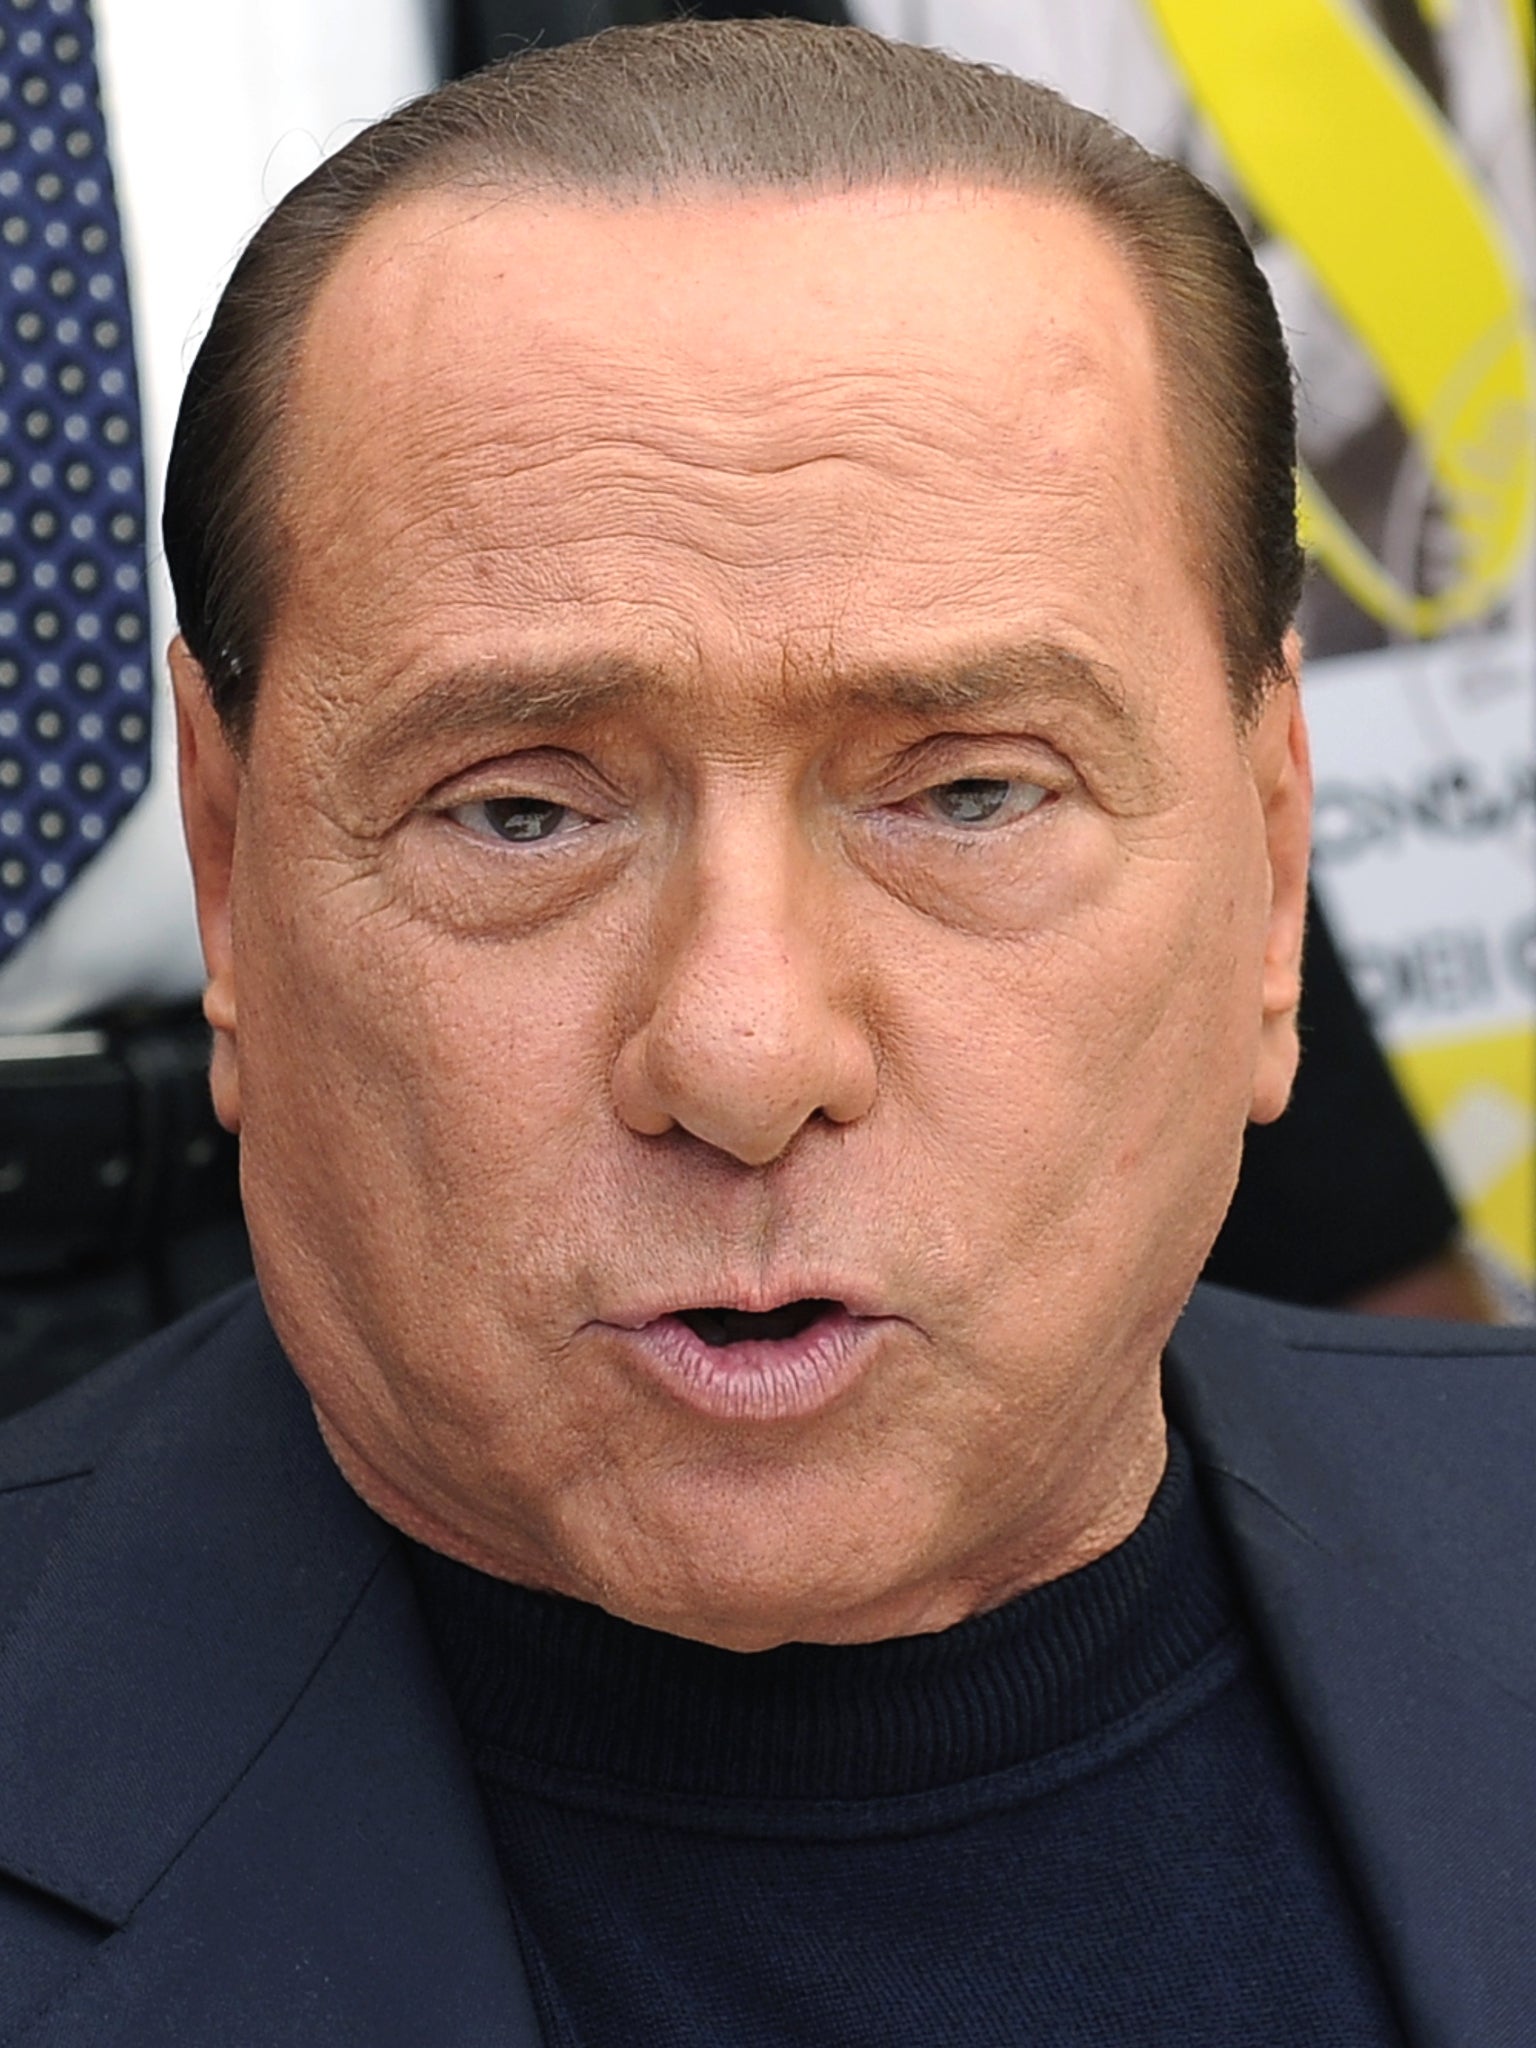 Ex-premier Silvio Berlusconi was convicted last month for tax fraud